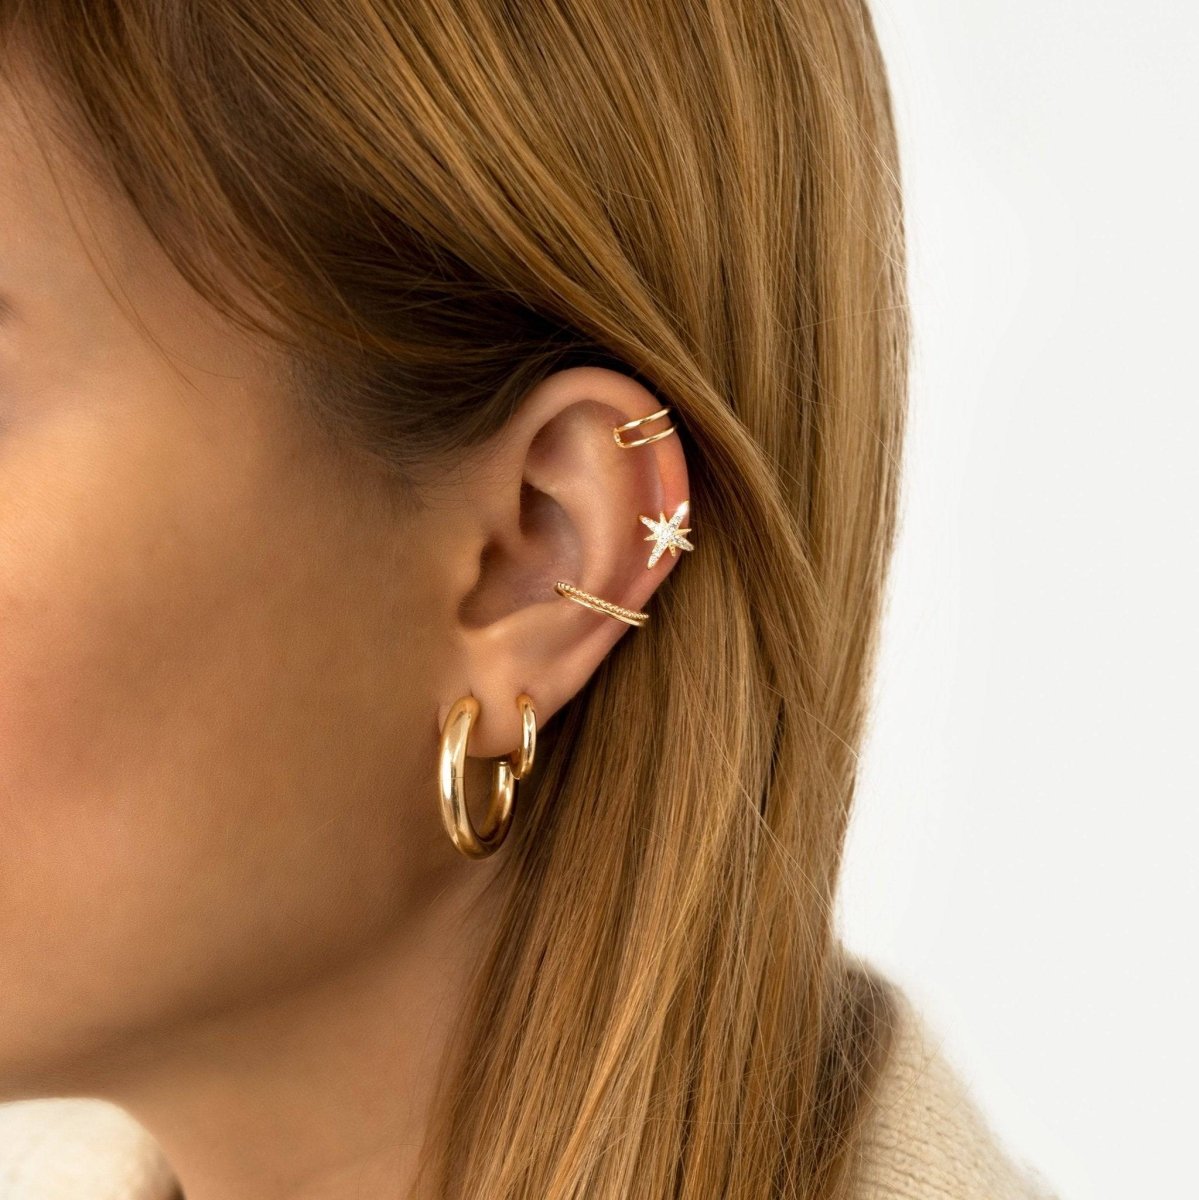 "Ear Cuff - Magical" Earrings - Milas Jewels Shop